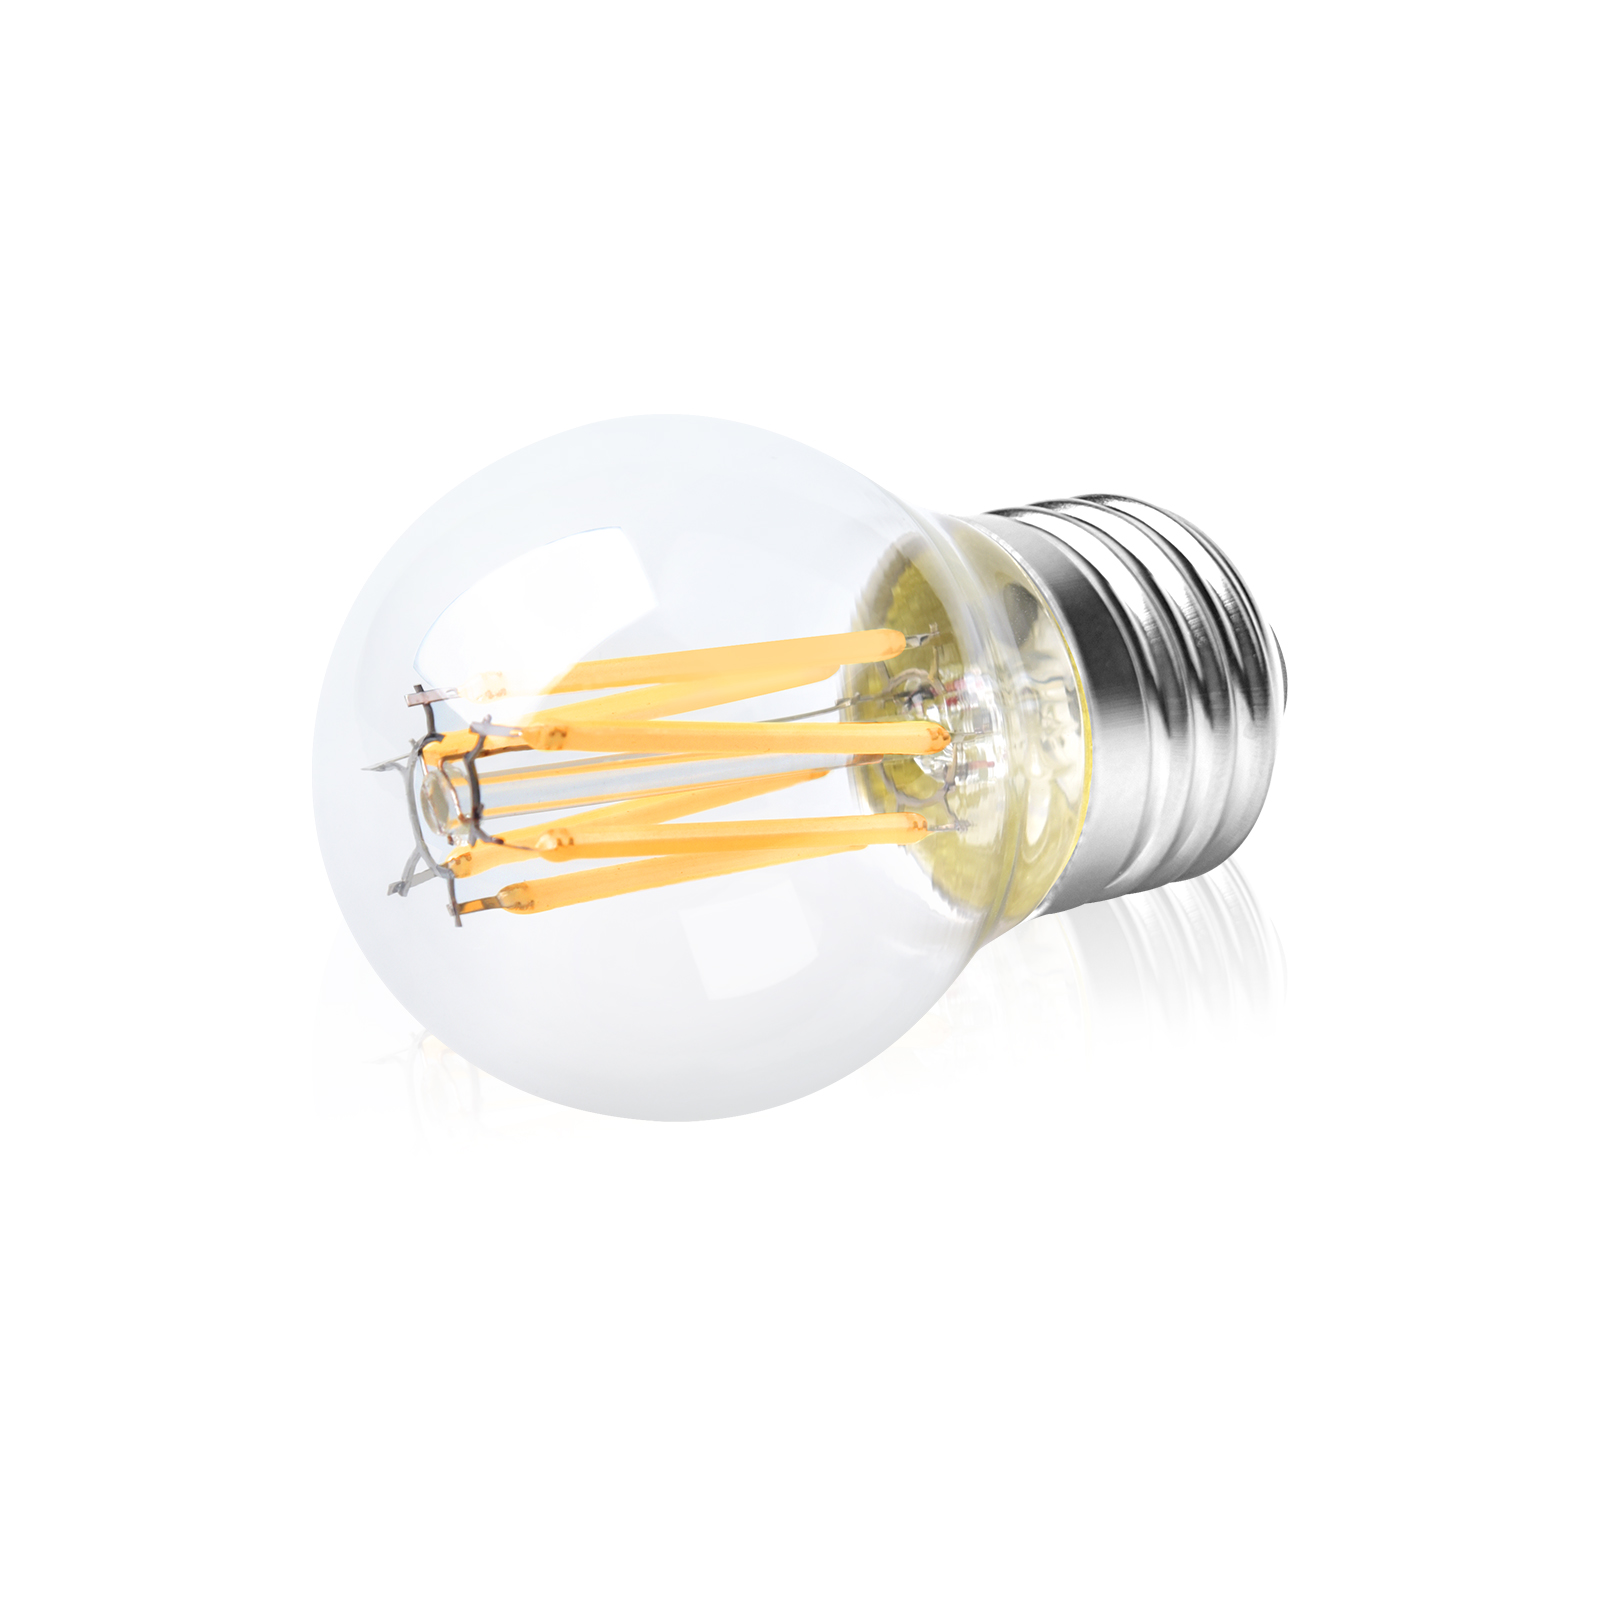 6W G45 E26 LED Vintage Light Bulb